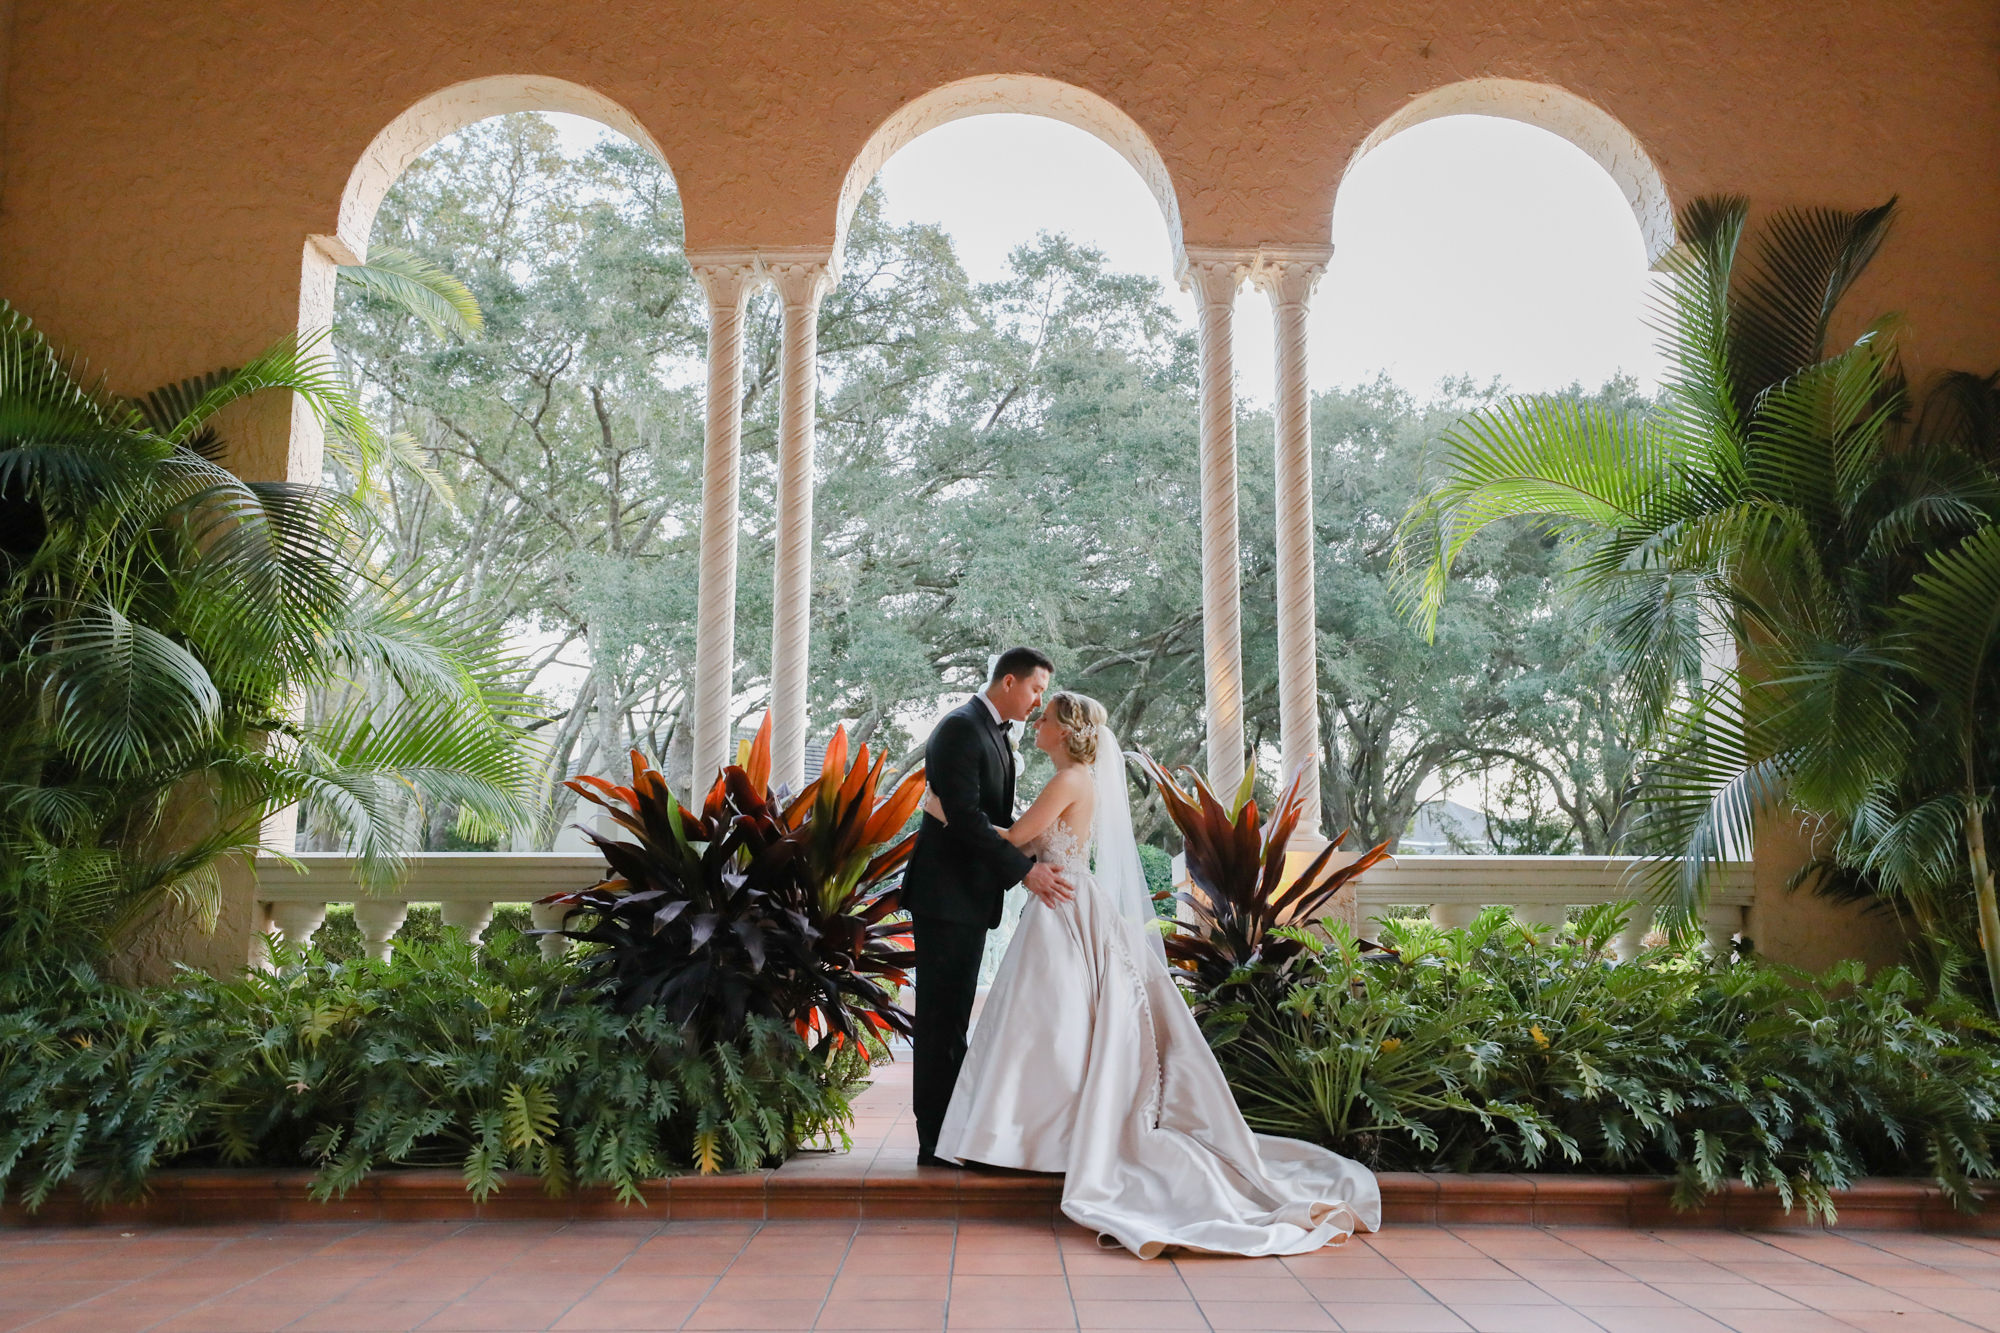 Bride and Groom Outdoor Garden Wedding Portrait | Tampa Bay Wedding Photographer Lifelong Photography Studio | Tampa Wedding Venue Avila Golf & Country Club